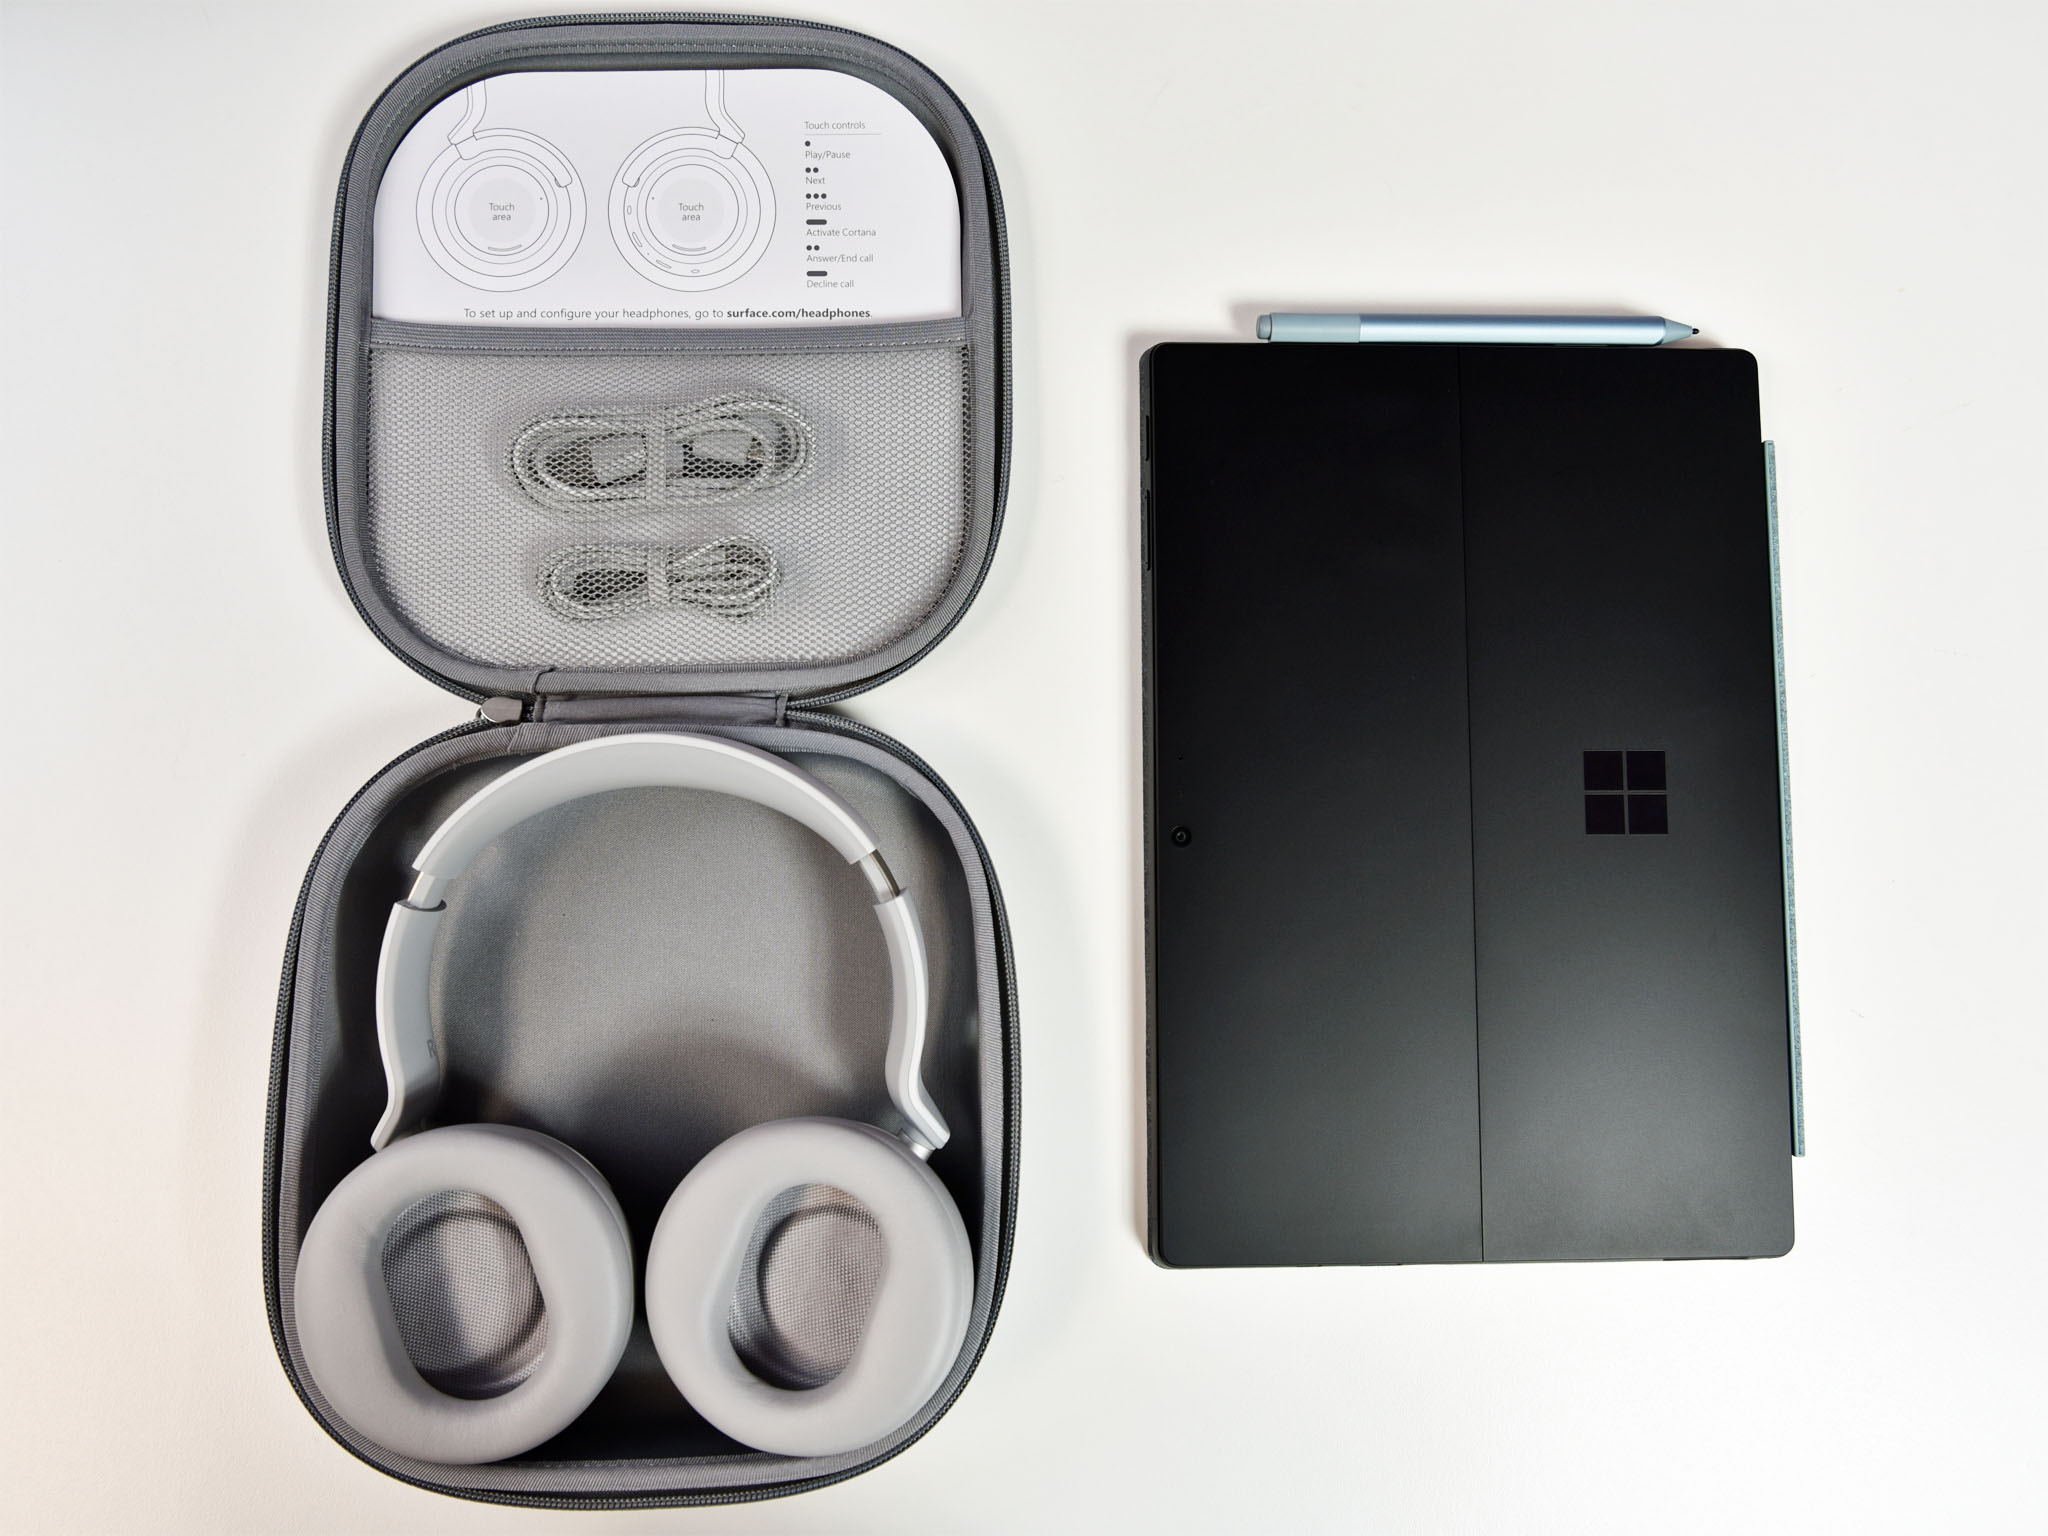 Microsoft Surface HeadphonesMicrosoft Surface Headphones